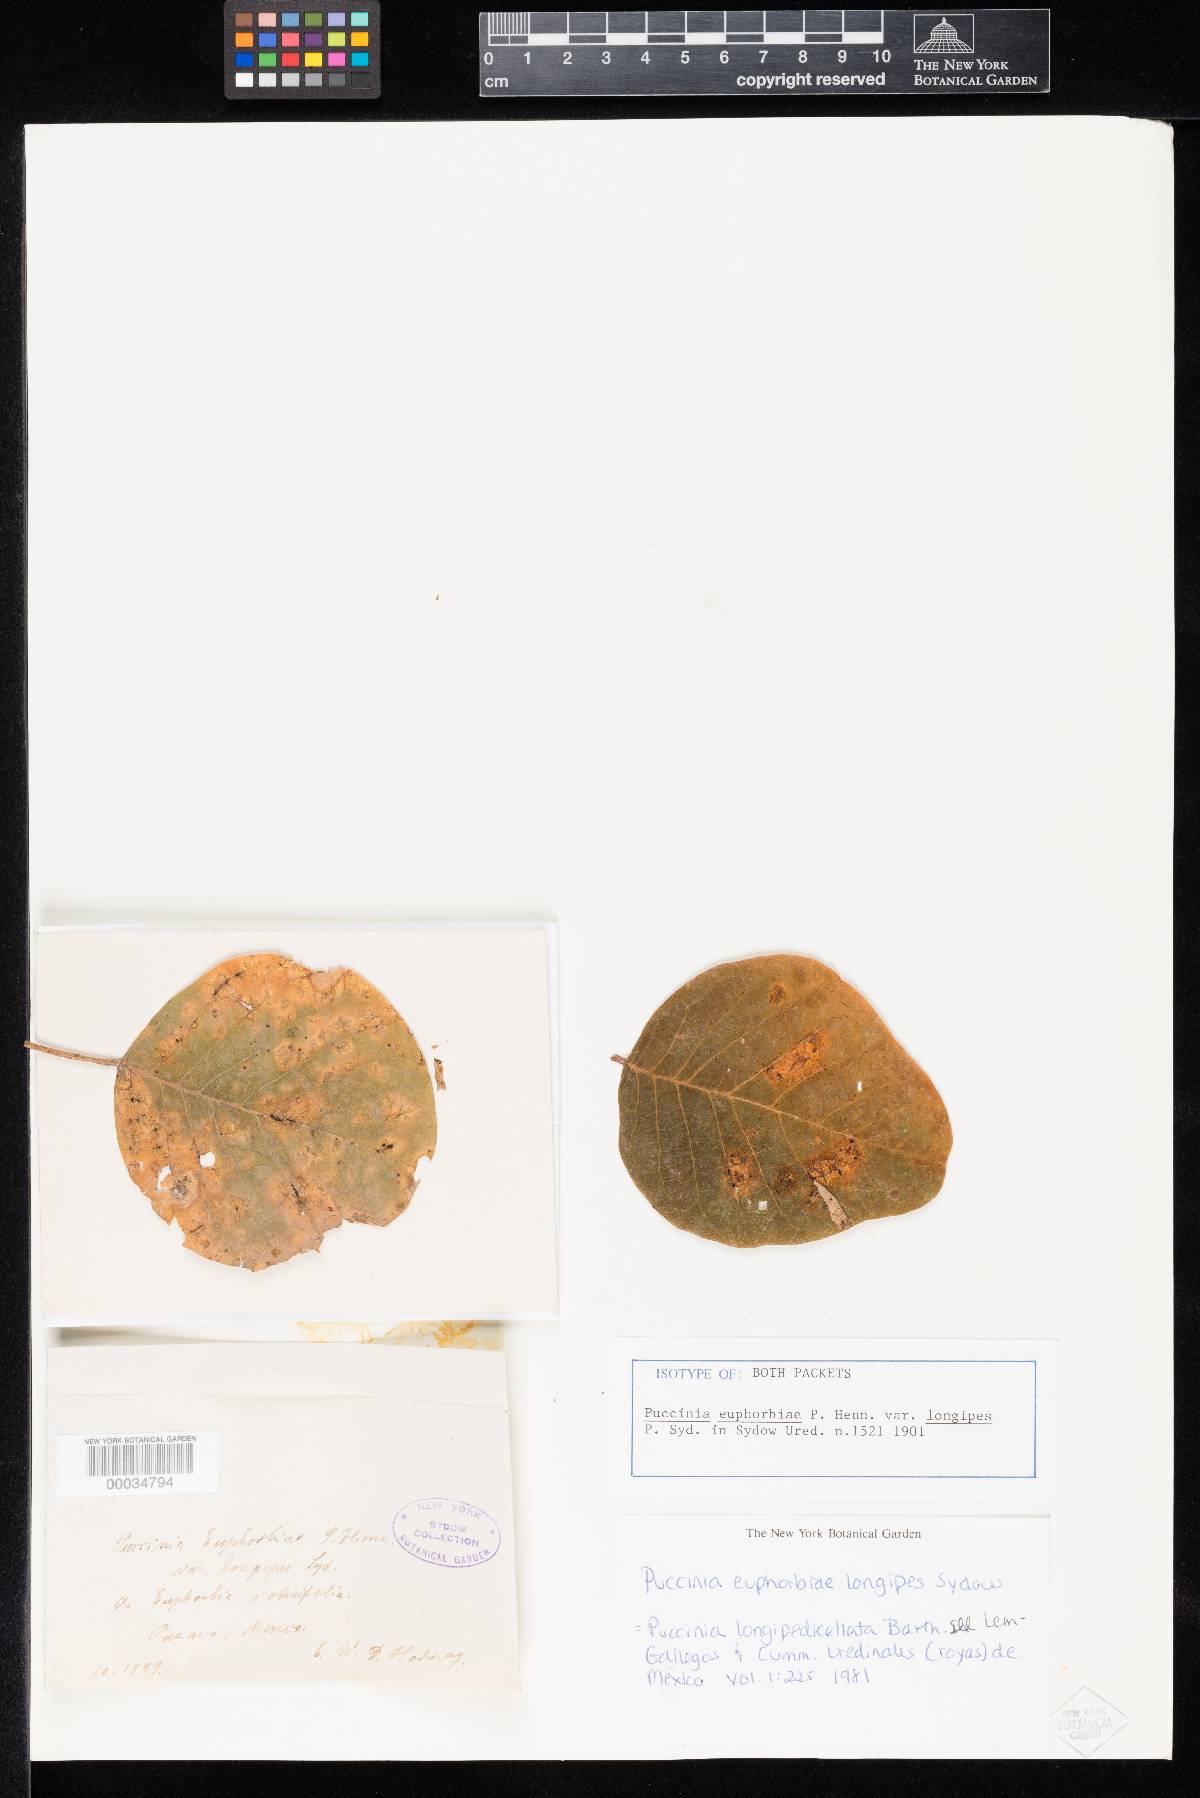 Puccinia euphorbiae var. longipes image